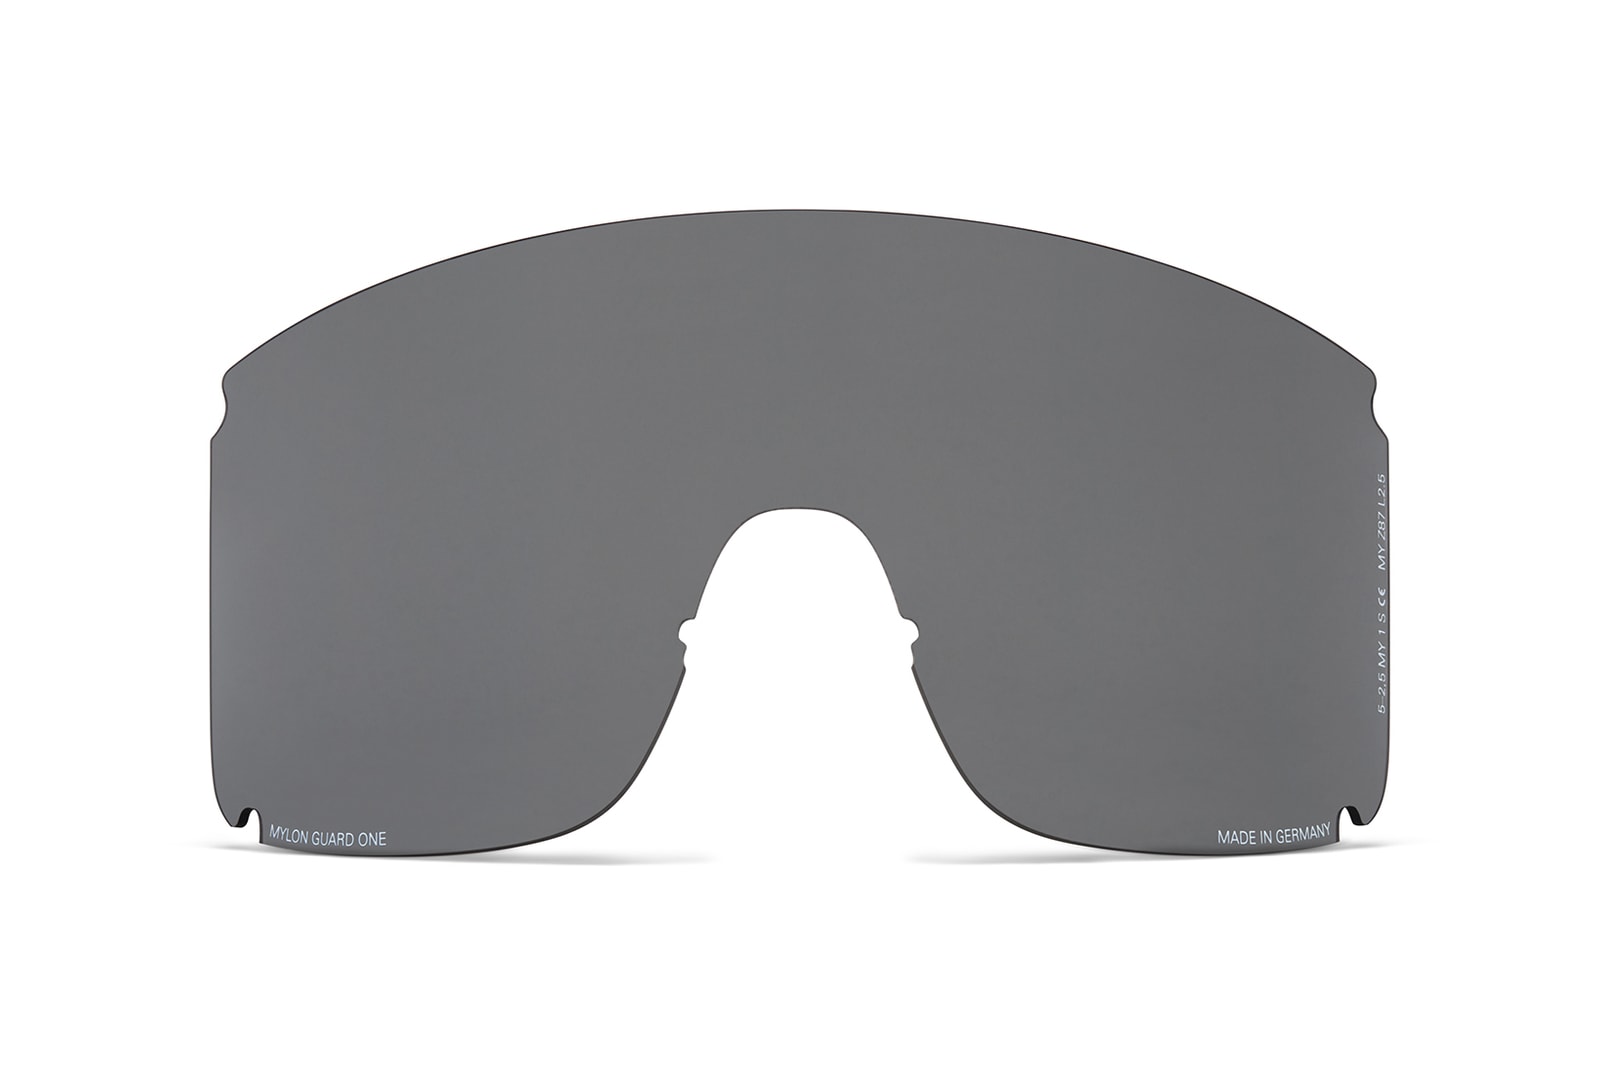 MYKITA Mylon Guard One Safety Glasses Shield PPE Protective Eyewear Coronavirus COVID-19